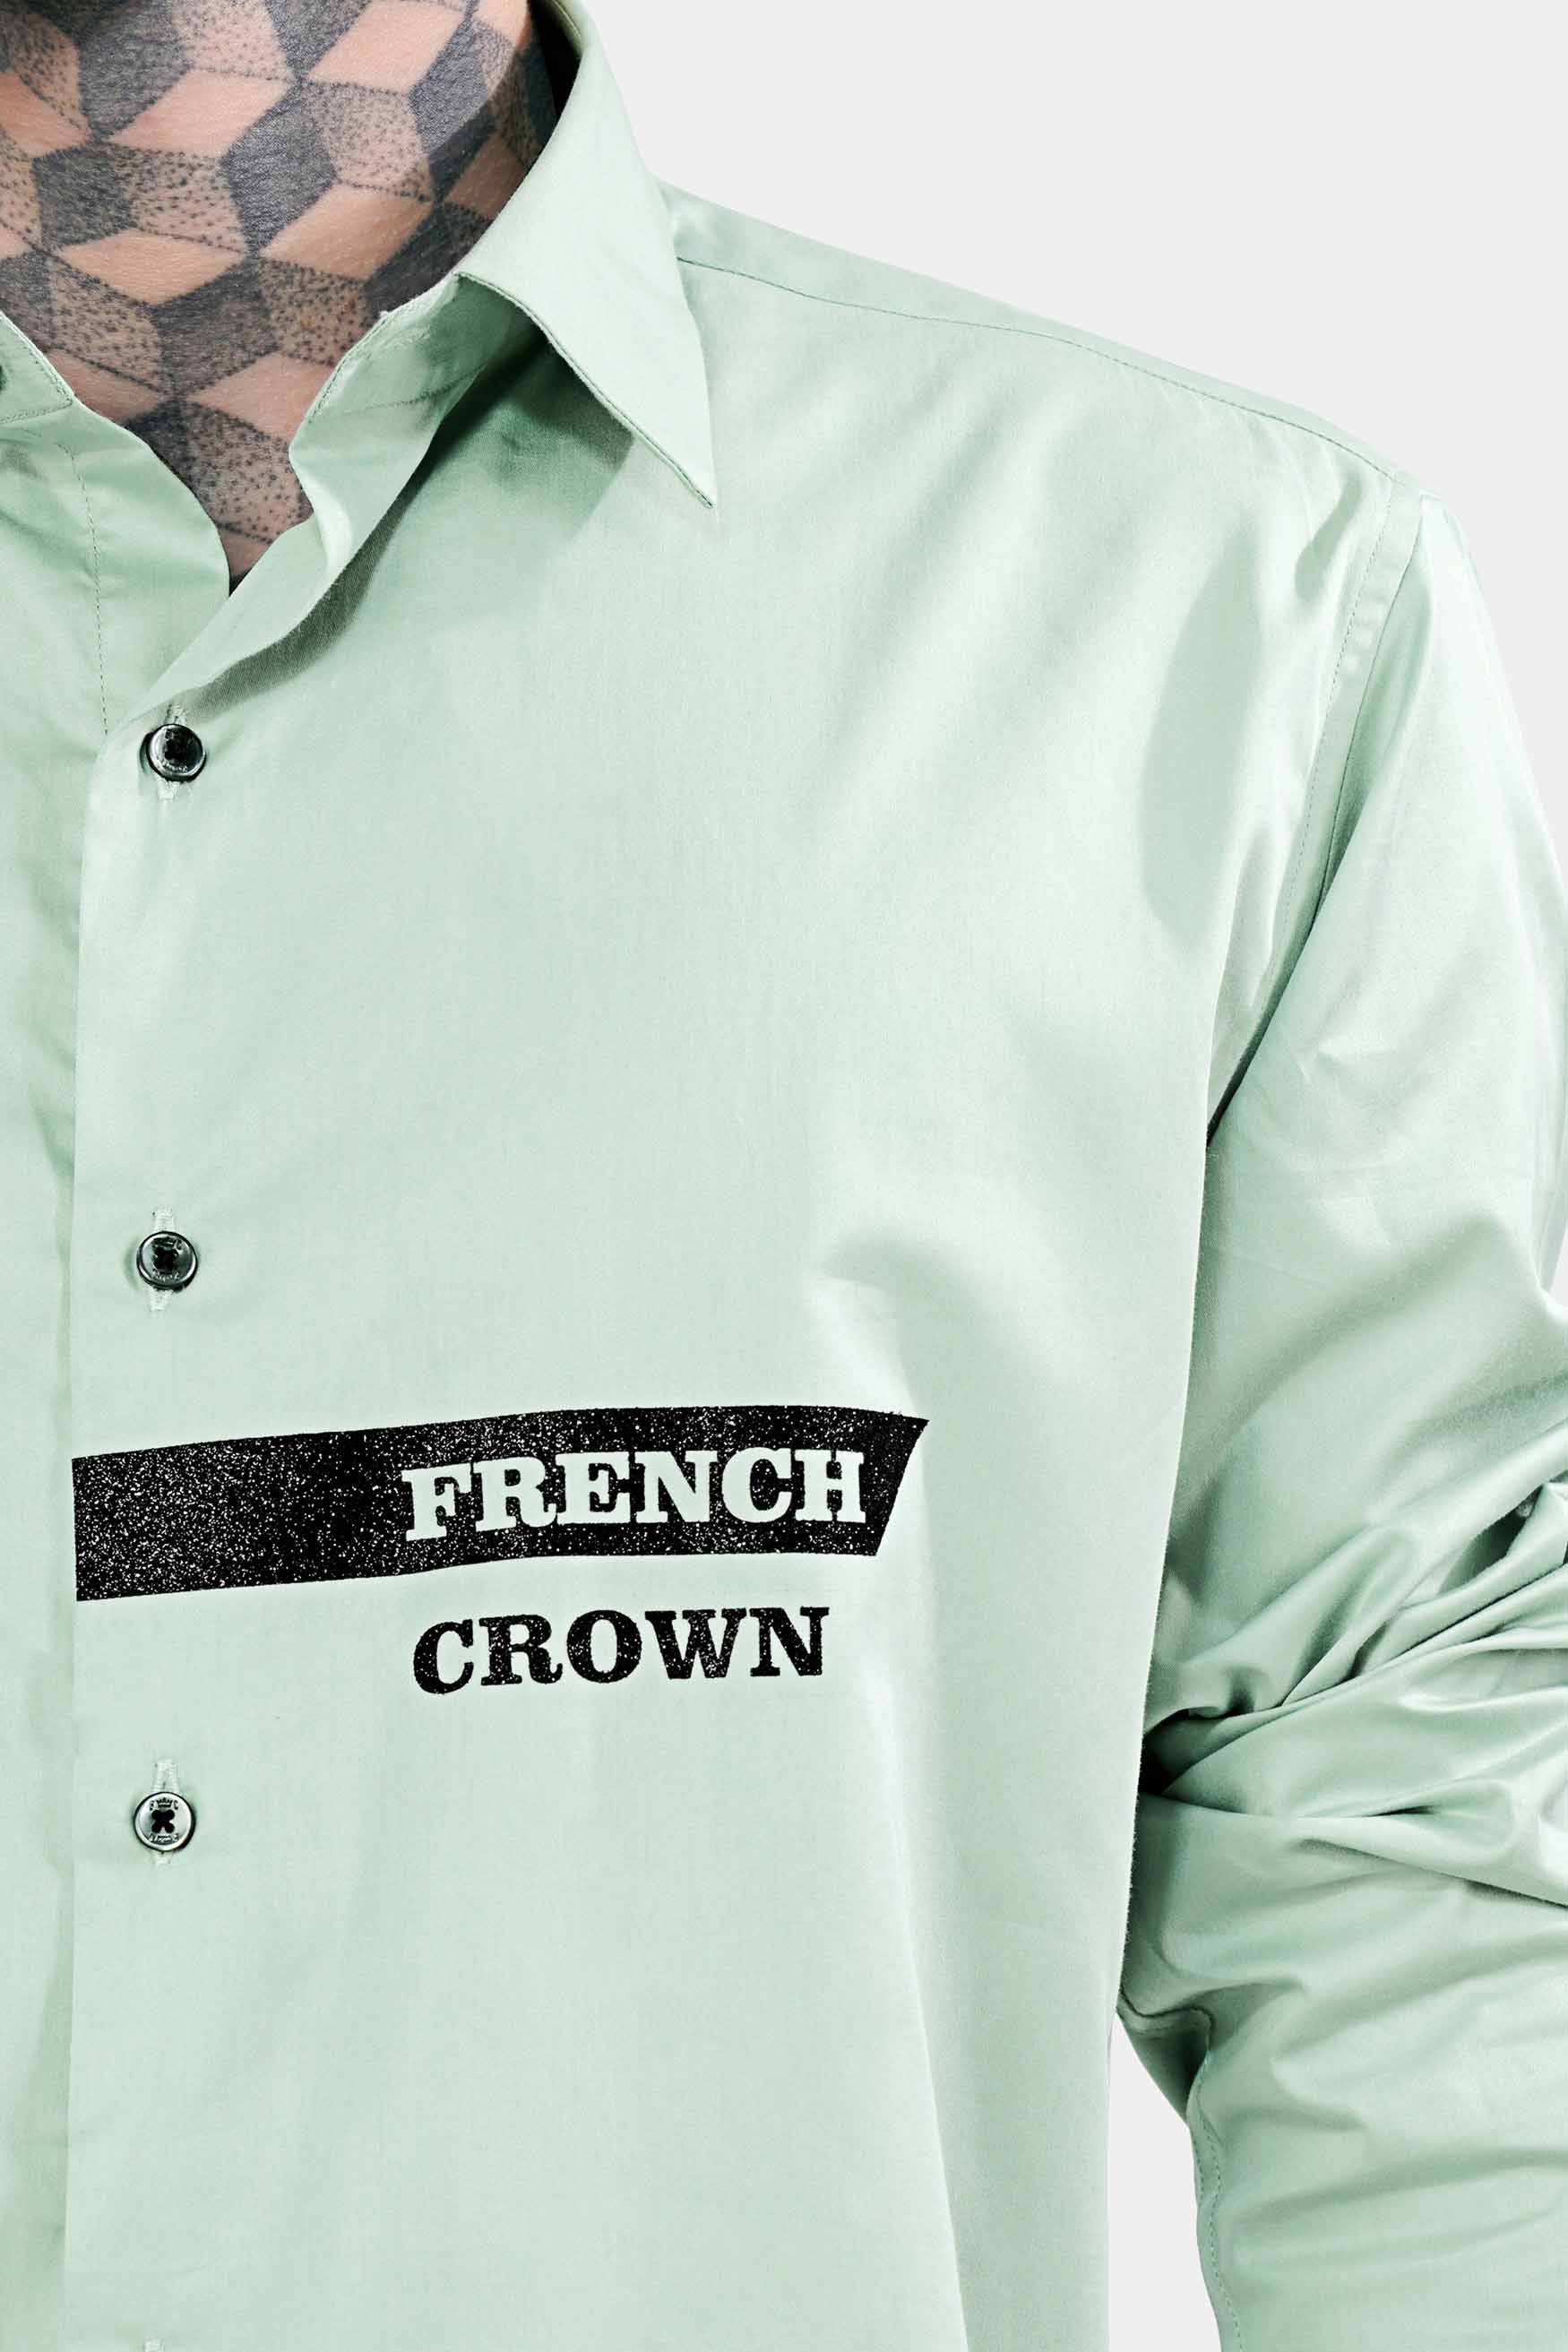 Sprout Green Brand Name Foil Printed Subtle Sheen Super Soft Premium Cotton Designer Shirt